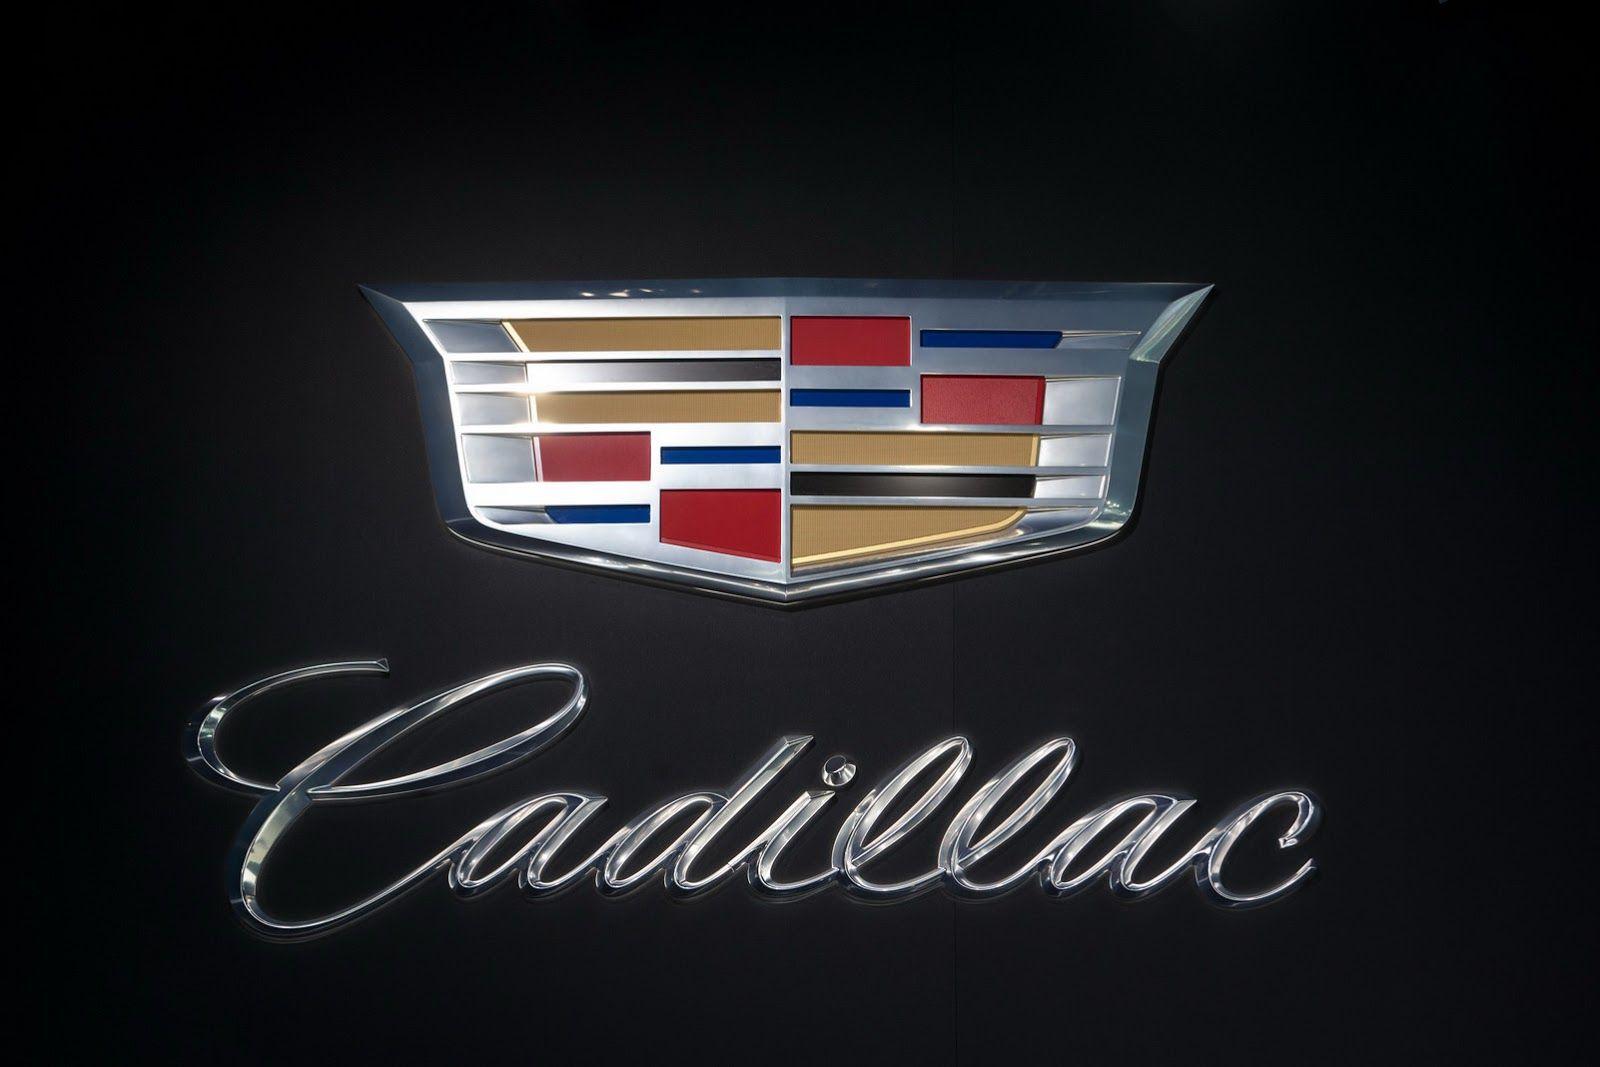 Black Cadillac Logo - Black Cadillac Desktop Wallpaper 931 1600x1067 px ~ PickyWallpapers.com